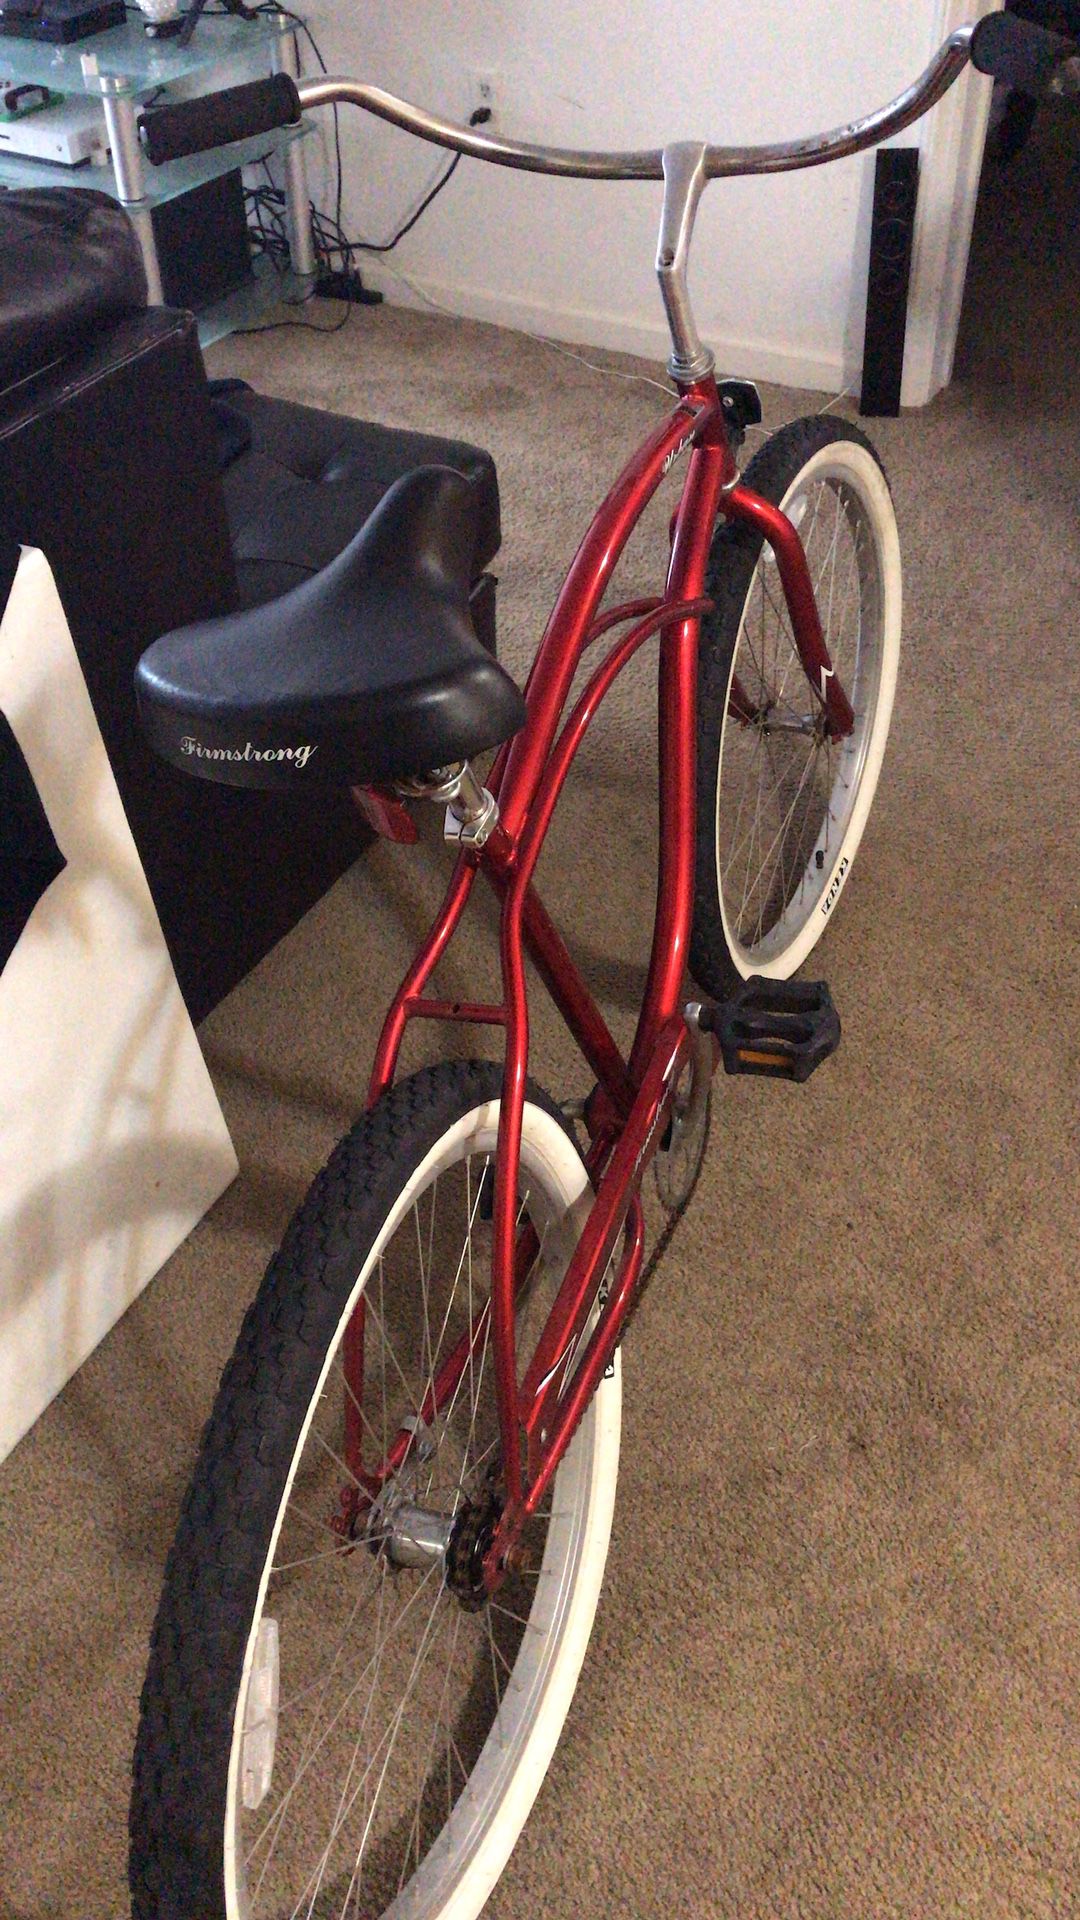 Nice candy red bike